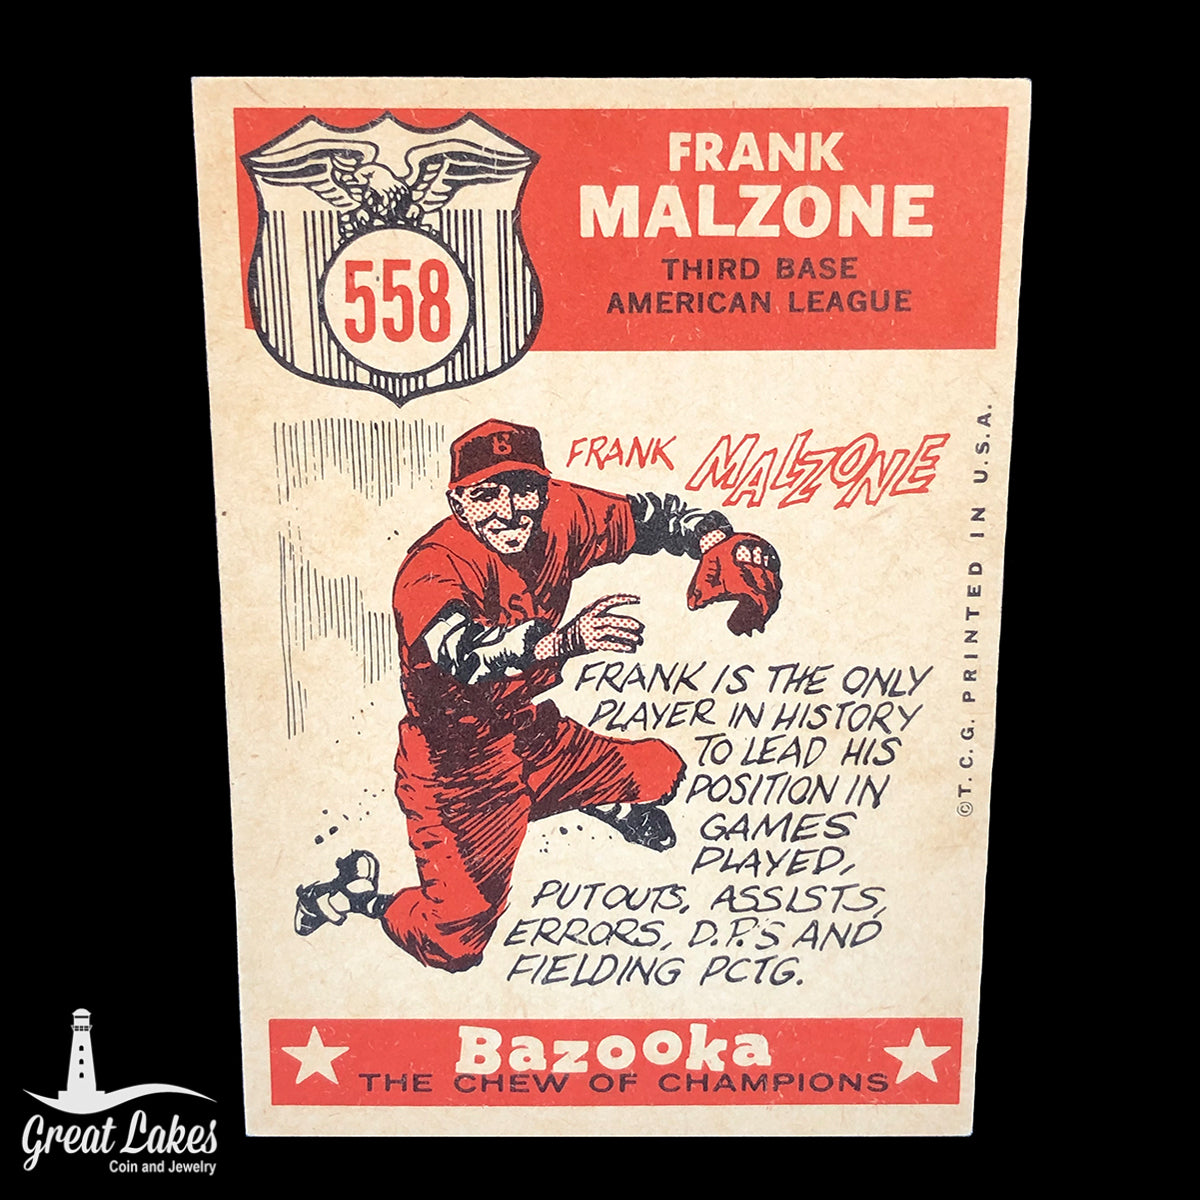 1959 Topps Frank Malzone All-Star Card #558